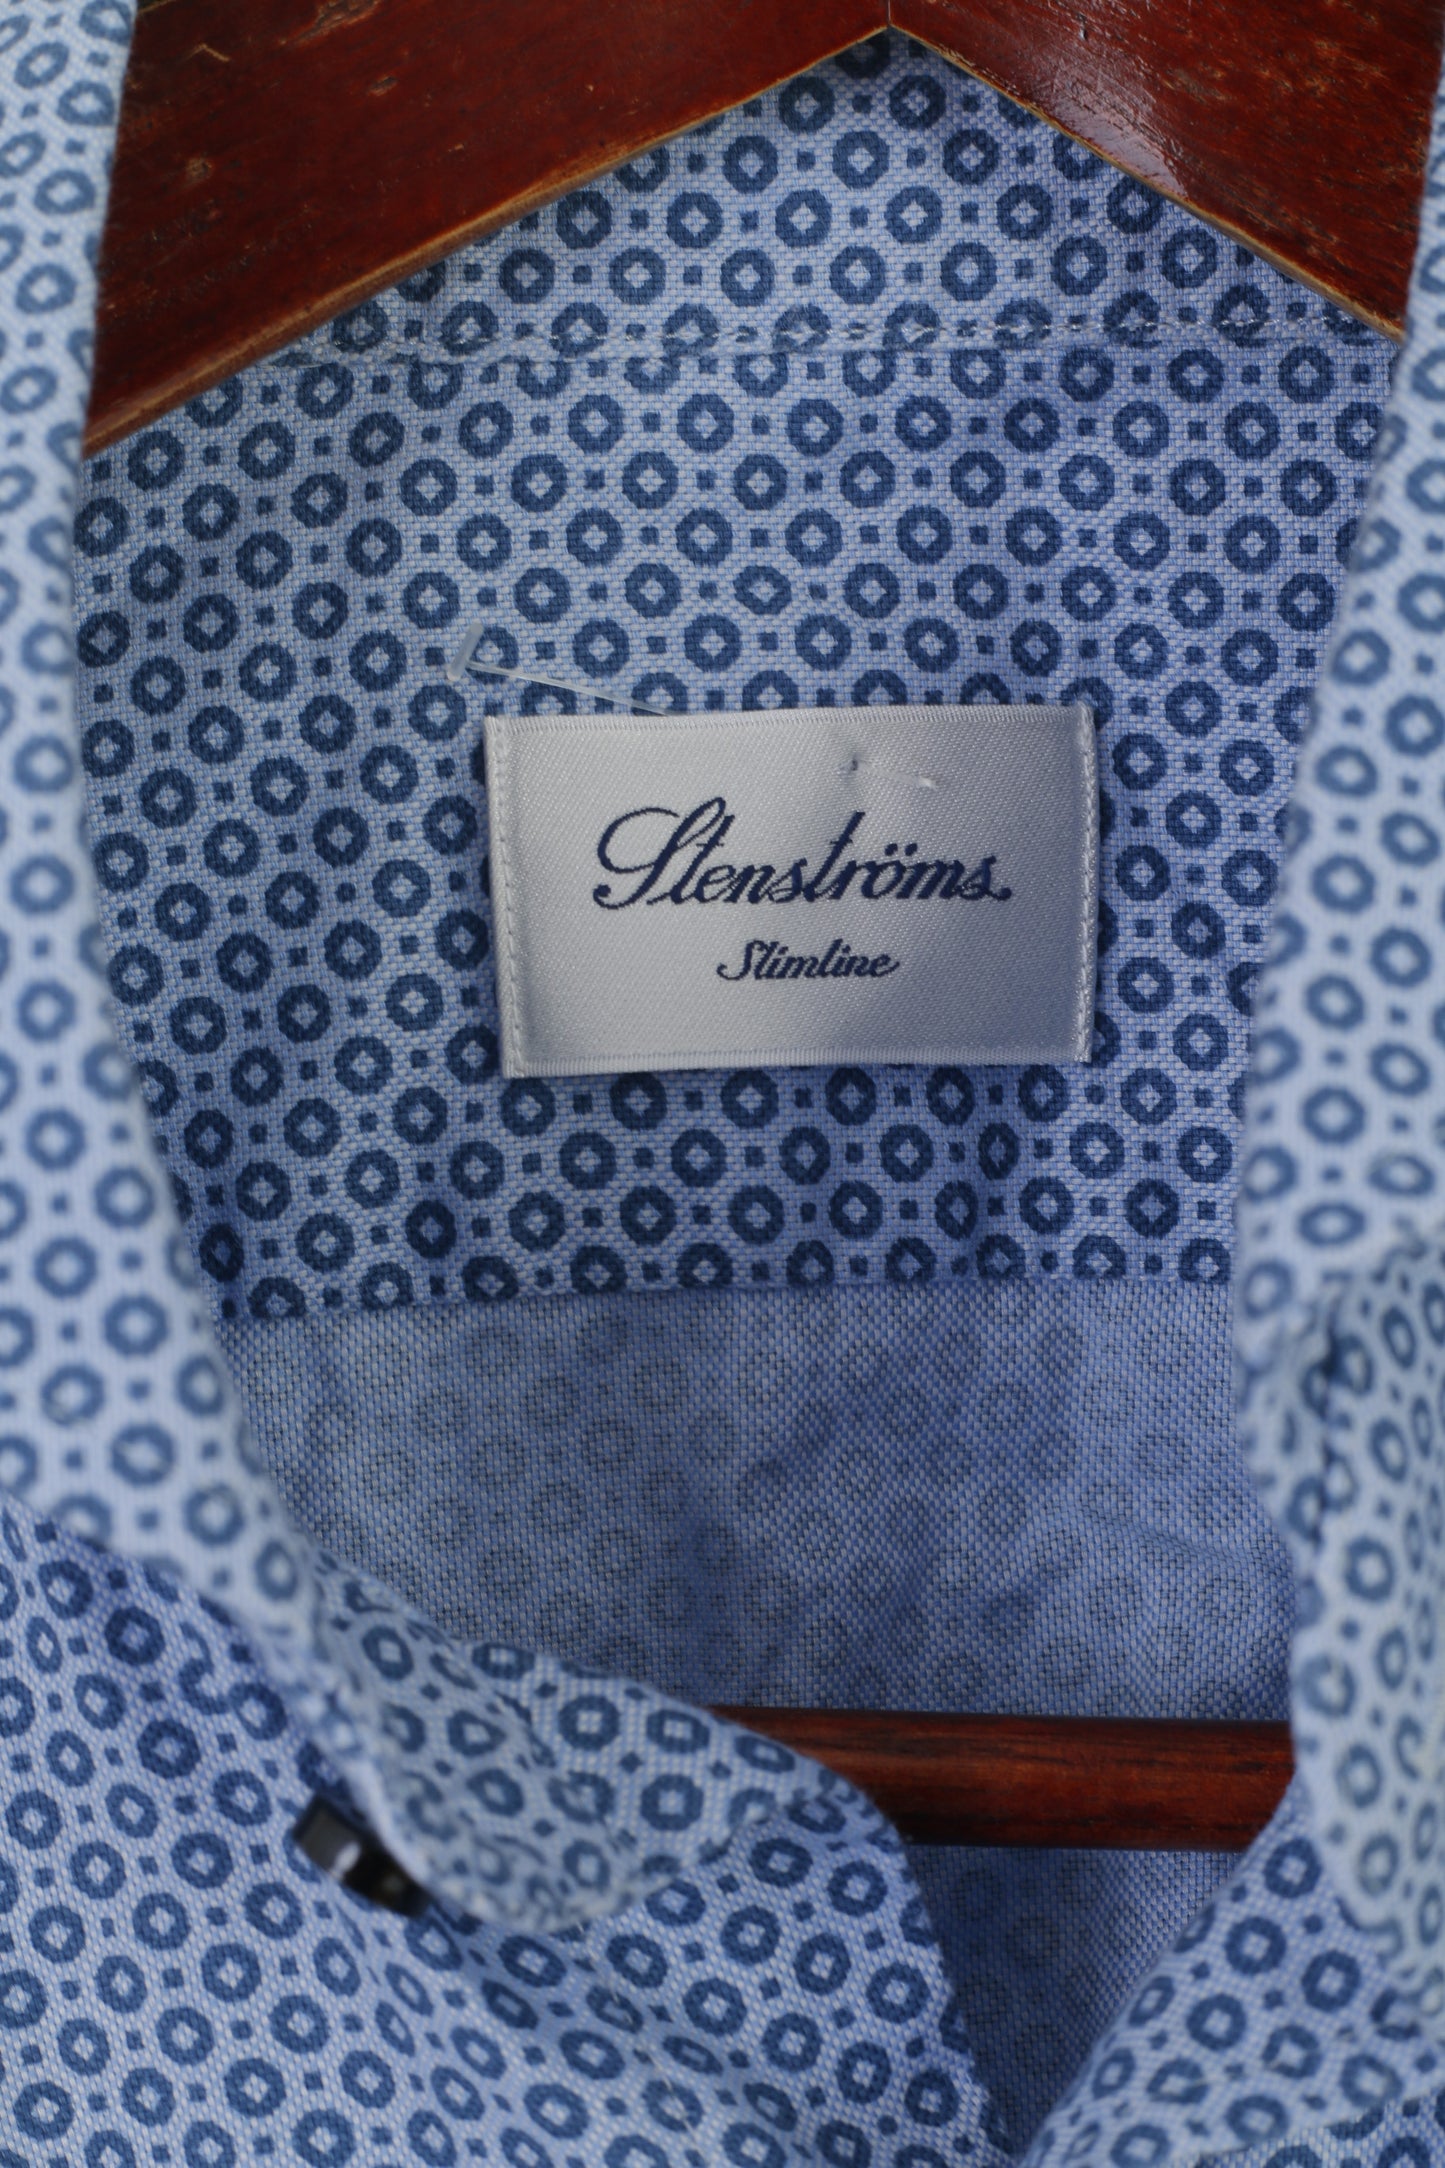 Stenstroms Men 40 S Casual Shirt Blue Cotton Slimline Fit Long Sleeve Top